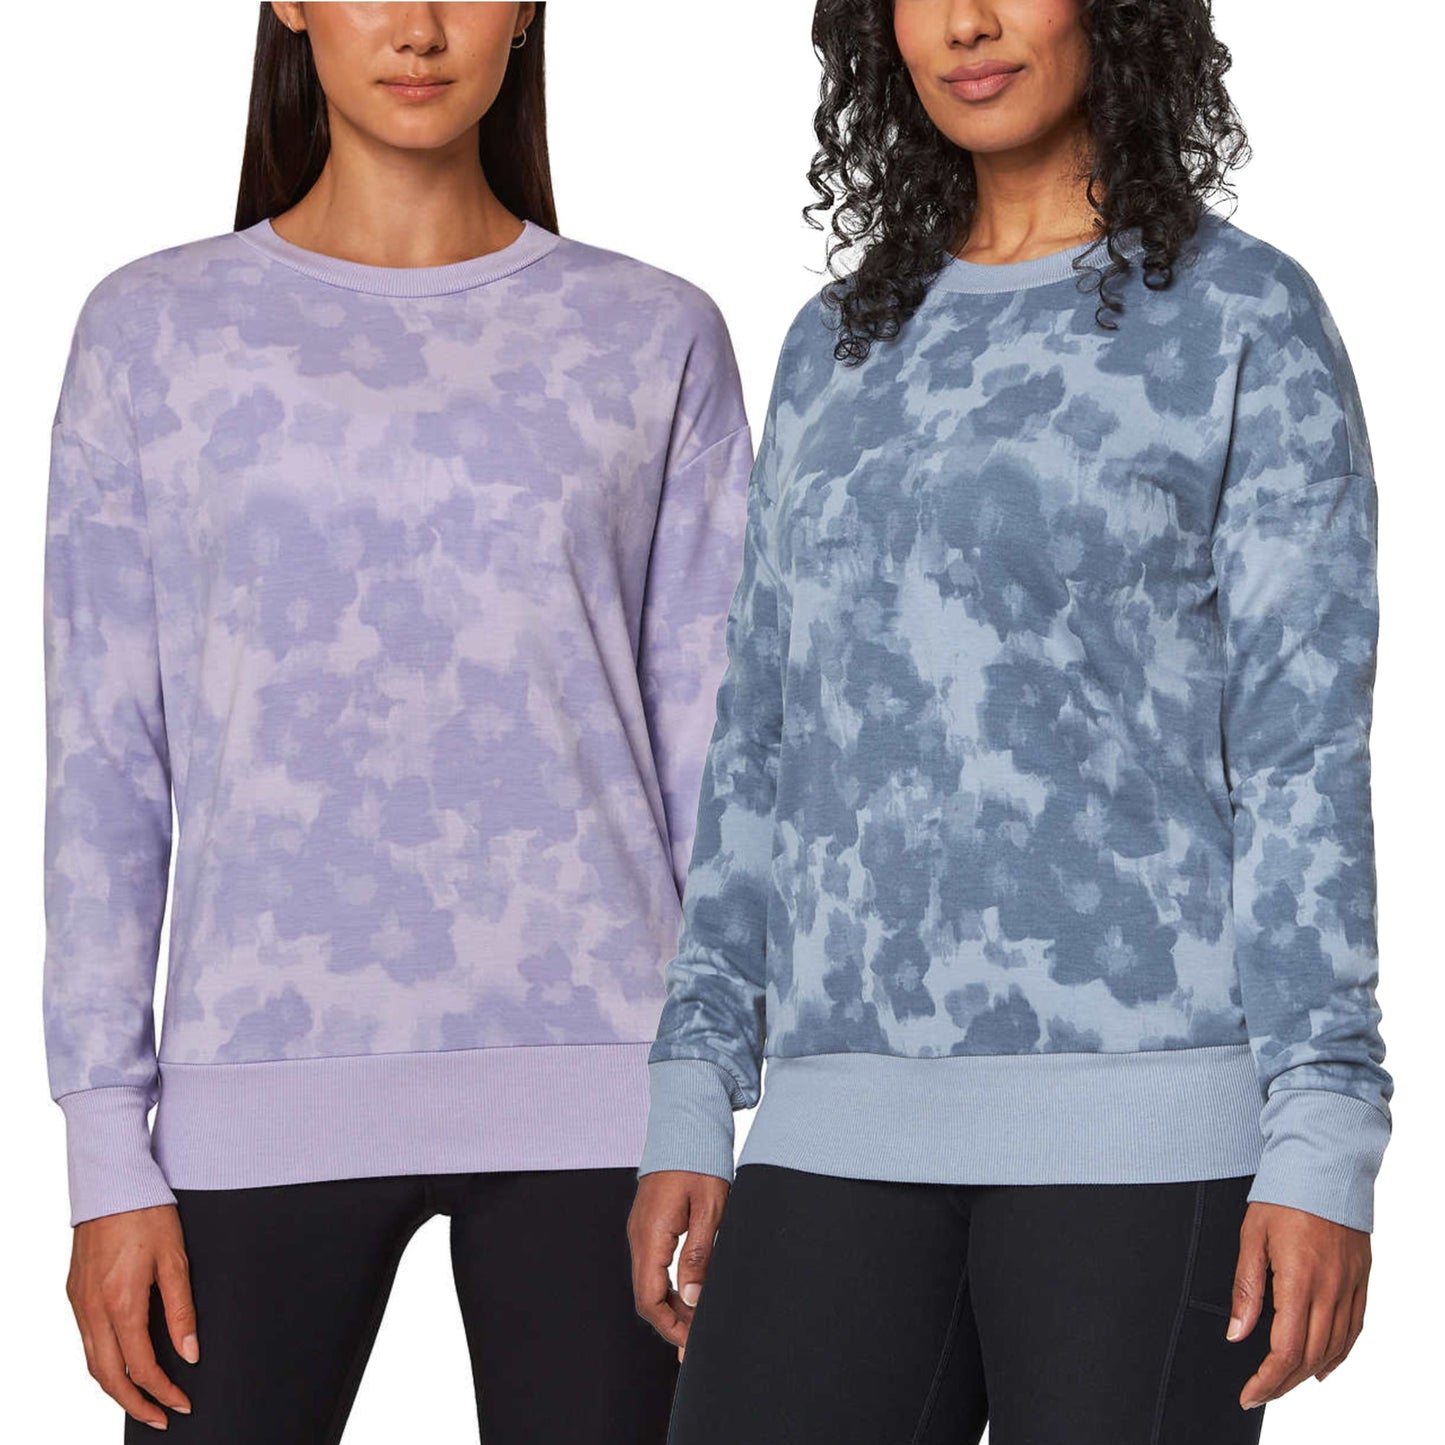 Mondetta Women's Floral Print Eco Soft Lightweight Casual Active Sweatshirt Top